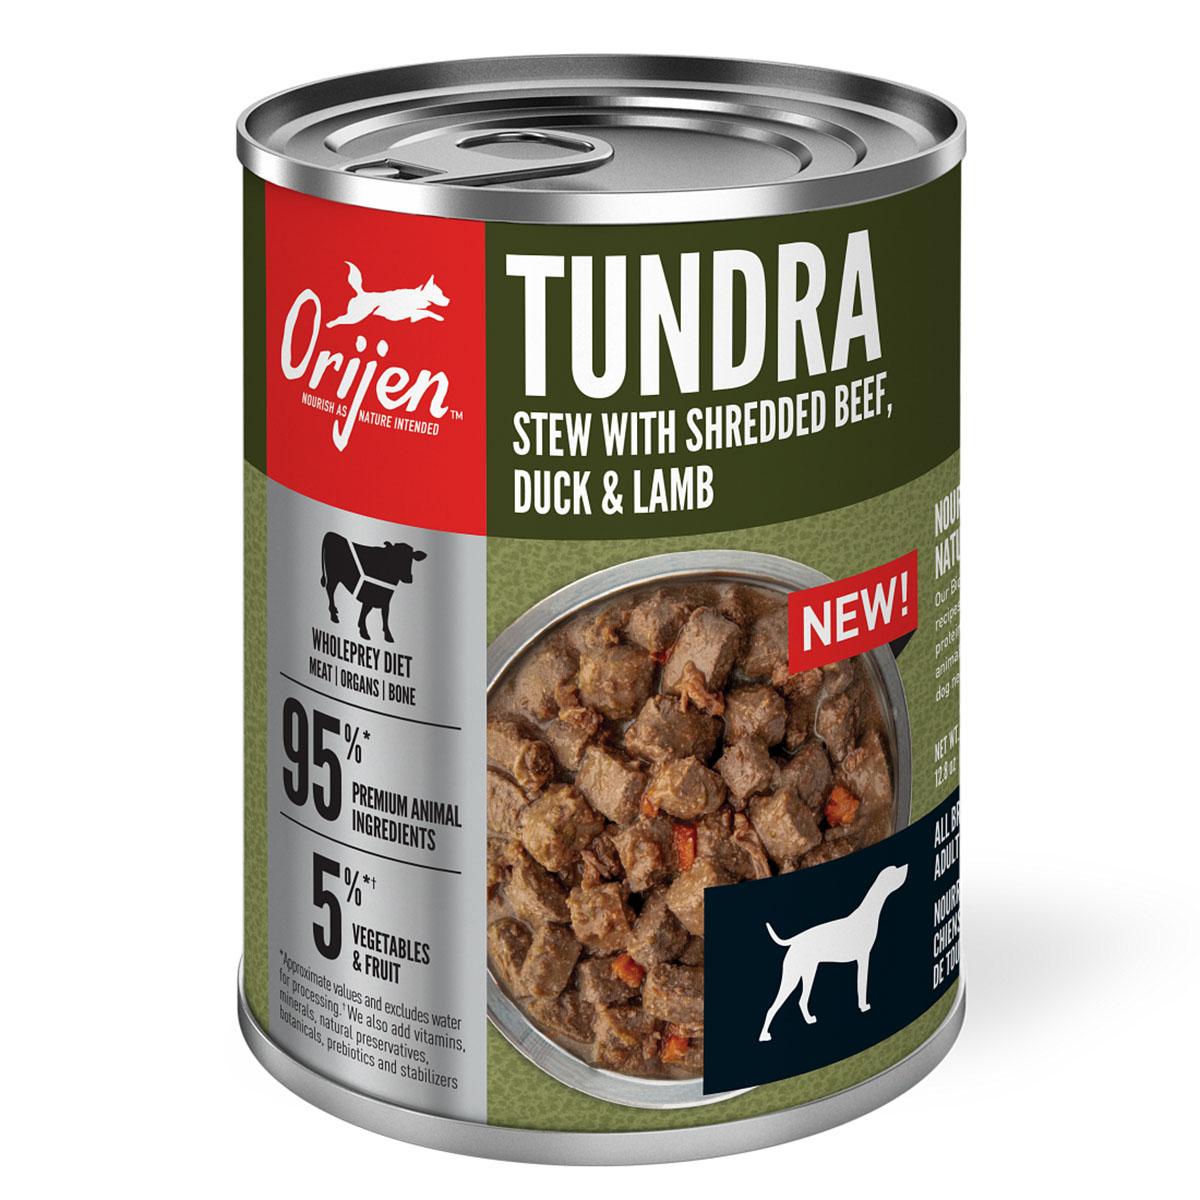 Orijen Tundra Stew Canned Dog Food